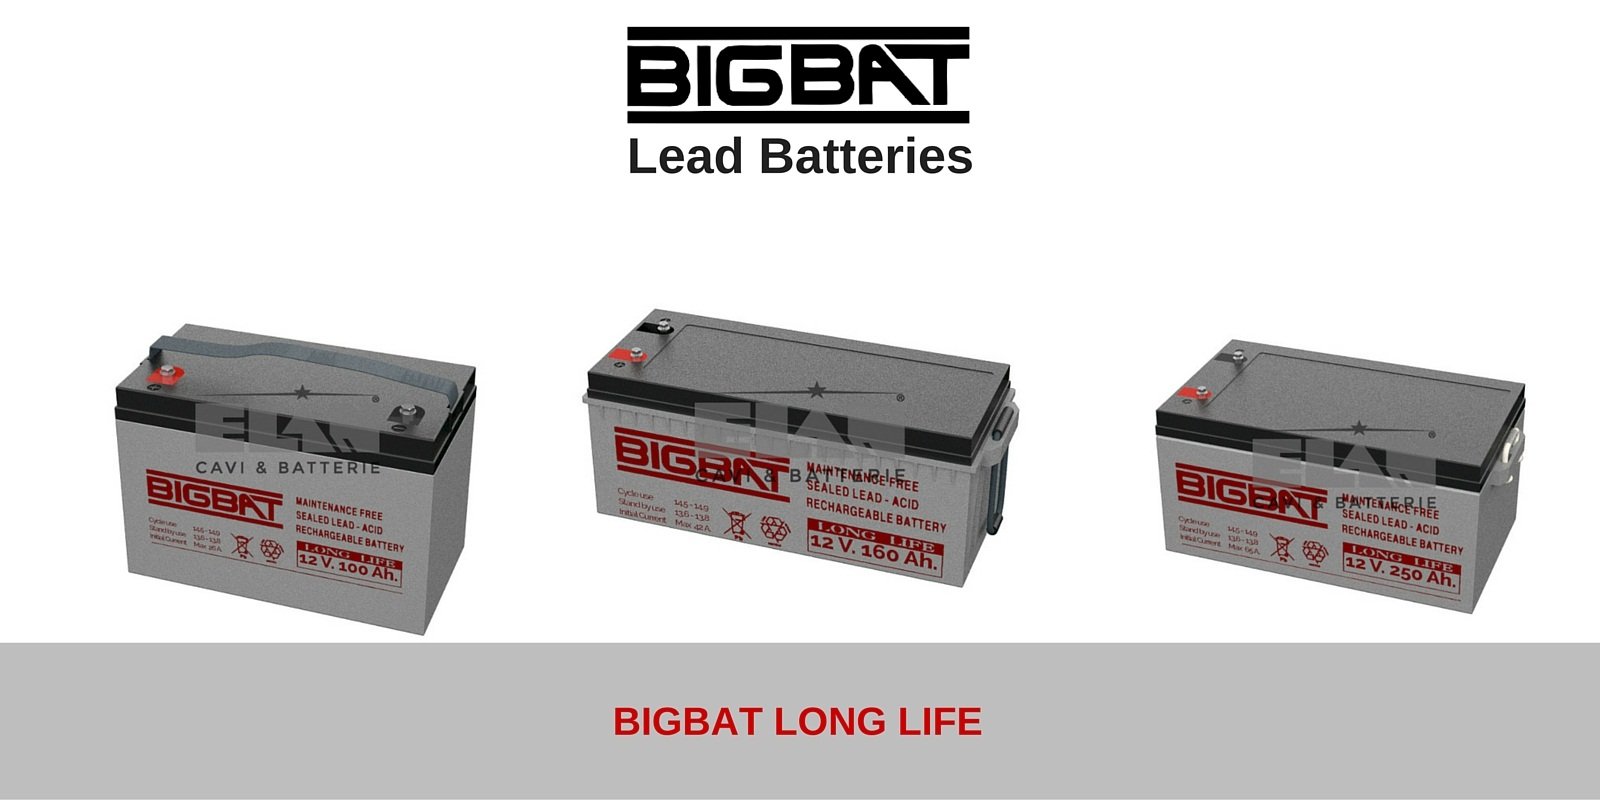 BIGBAT Lead Batteries Long Life